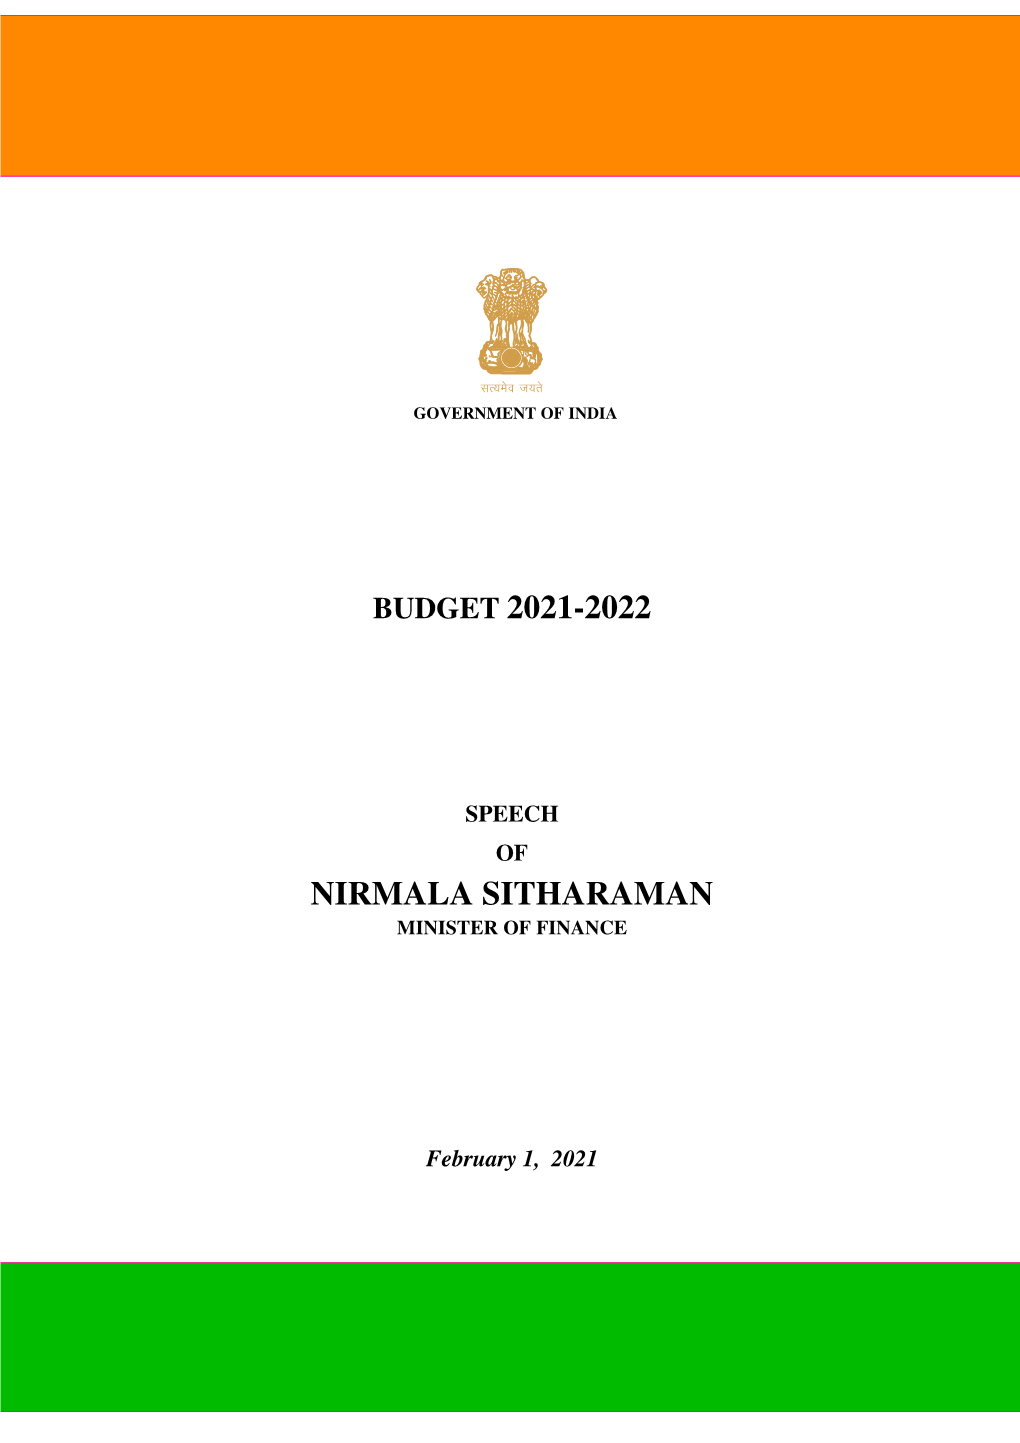 Budget 2021-2022 Nirmala Sitharaman